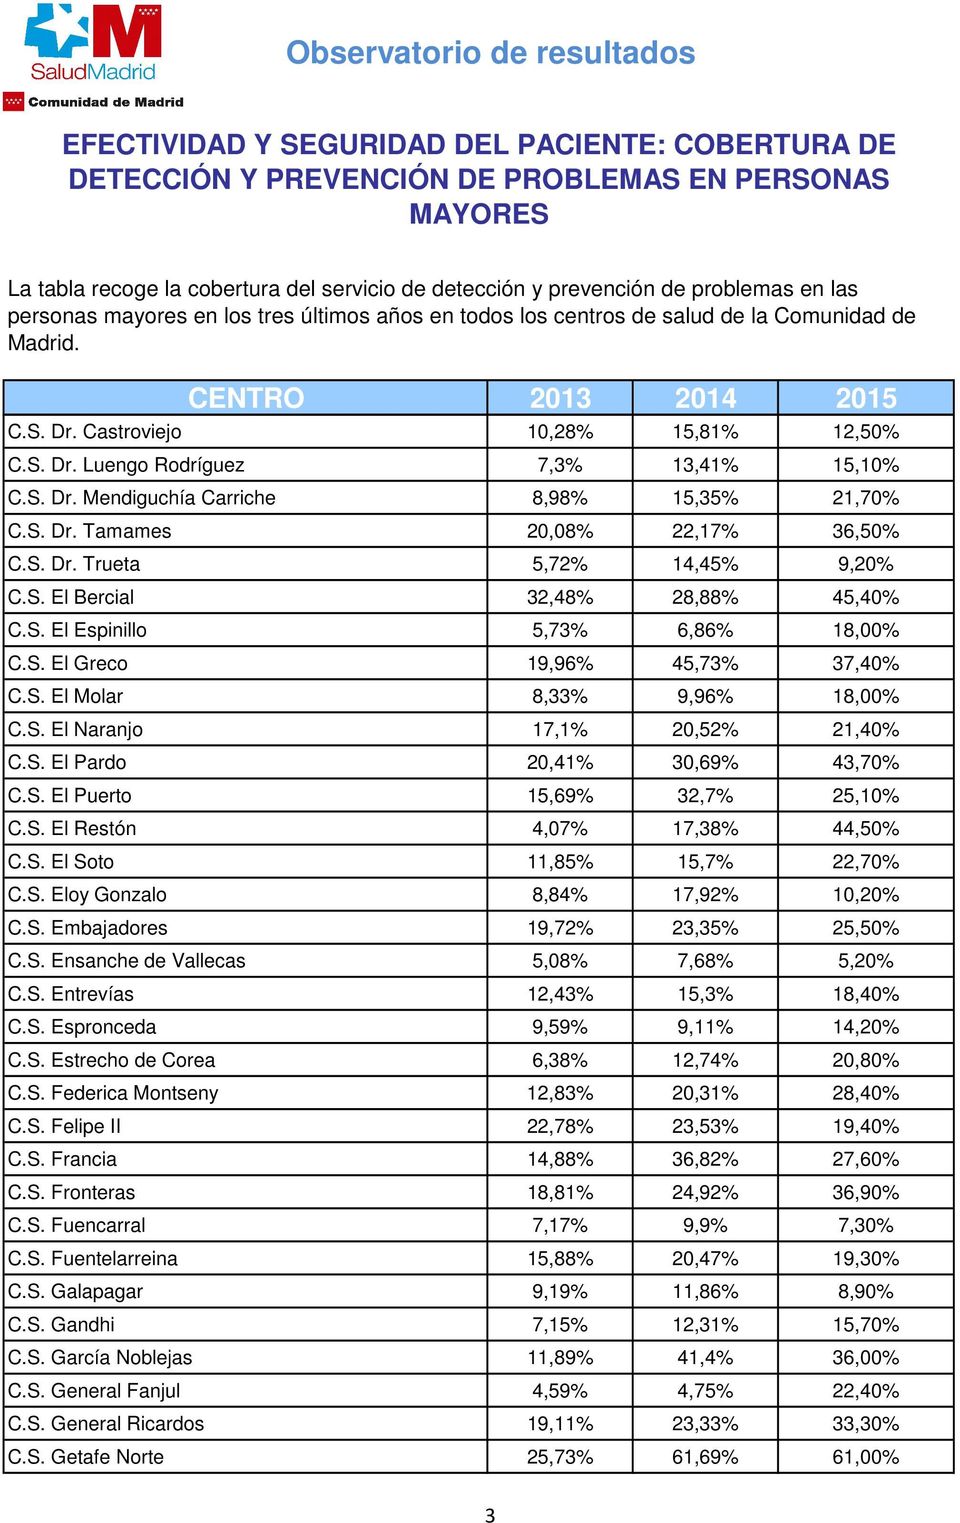 S. El Puerto 15,69% 32,7% 25,10% C.S. El Restón 4,07% 17,38% 44,50% C.S. El Soto 11,85% 15,7% 22,70% C.S. Eloy Gonzalo 8,84% 17,92% 10,20% C.S. Embajadores 19,72% 23,35% 25,50% C.S. Ensanche de Vallecas 5,08% 7,68% 5,20% C.